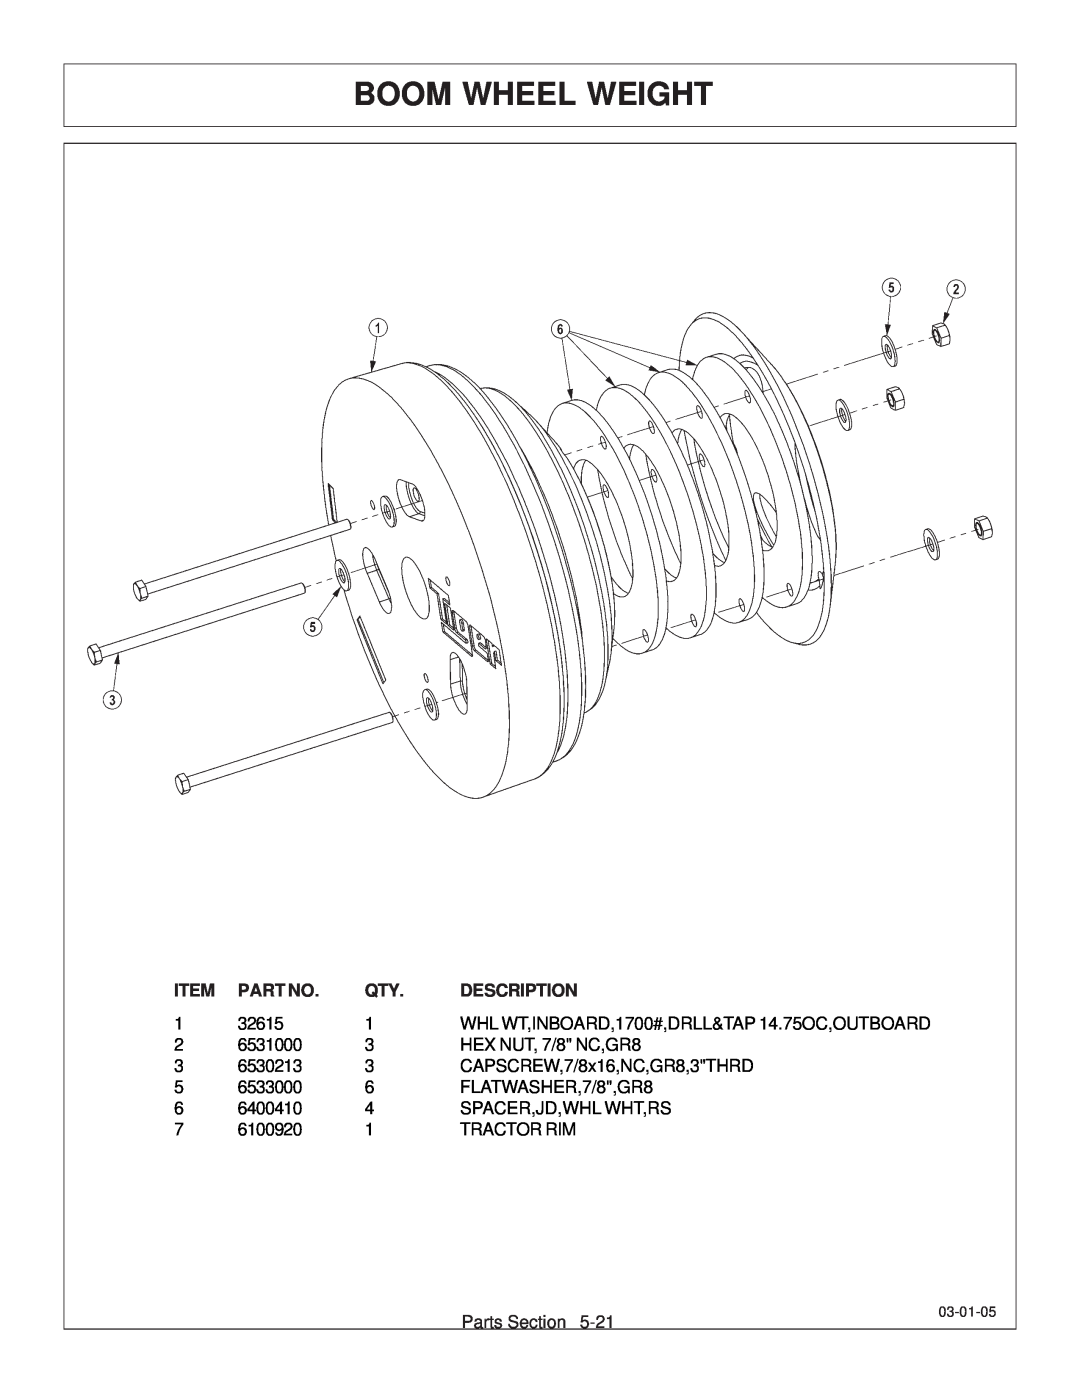 Tiger JD 62-6420 manual Boom Wheel Weight, Description 